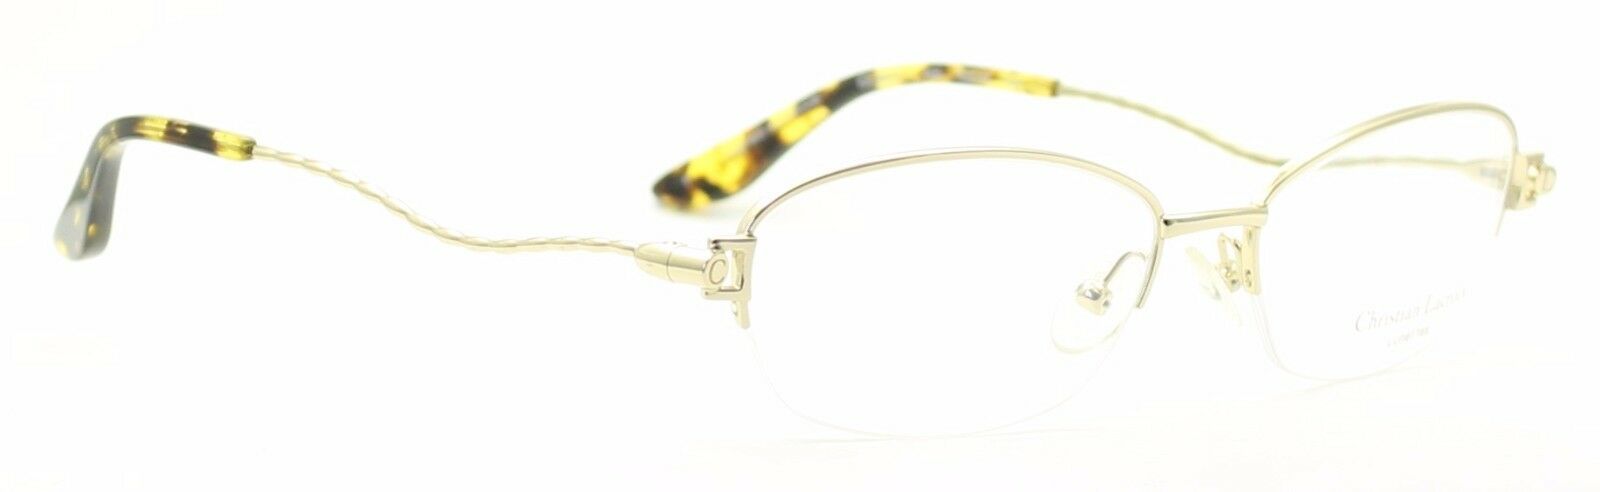 CHRISTIAN LACROIX CL3011 400 Eyewear RX Optical FRAMES Eyeglasses Glasses - BNIB